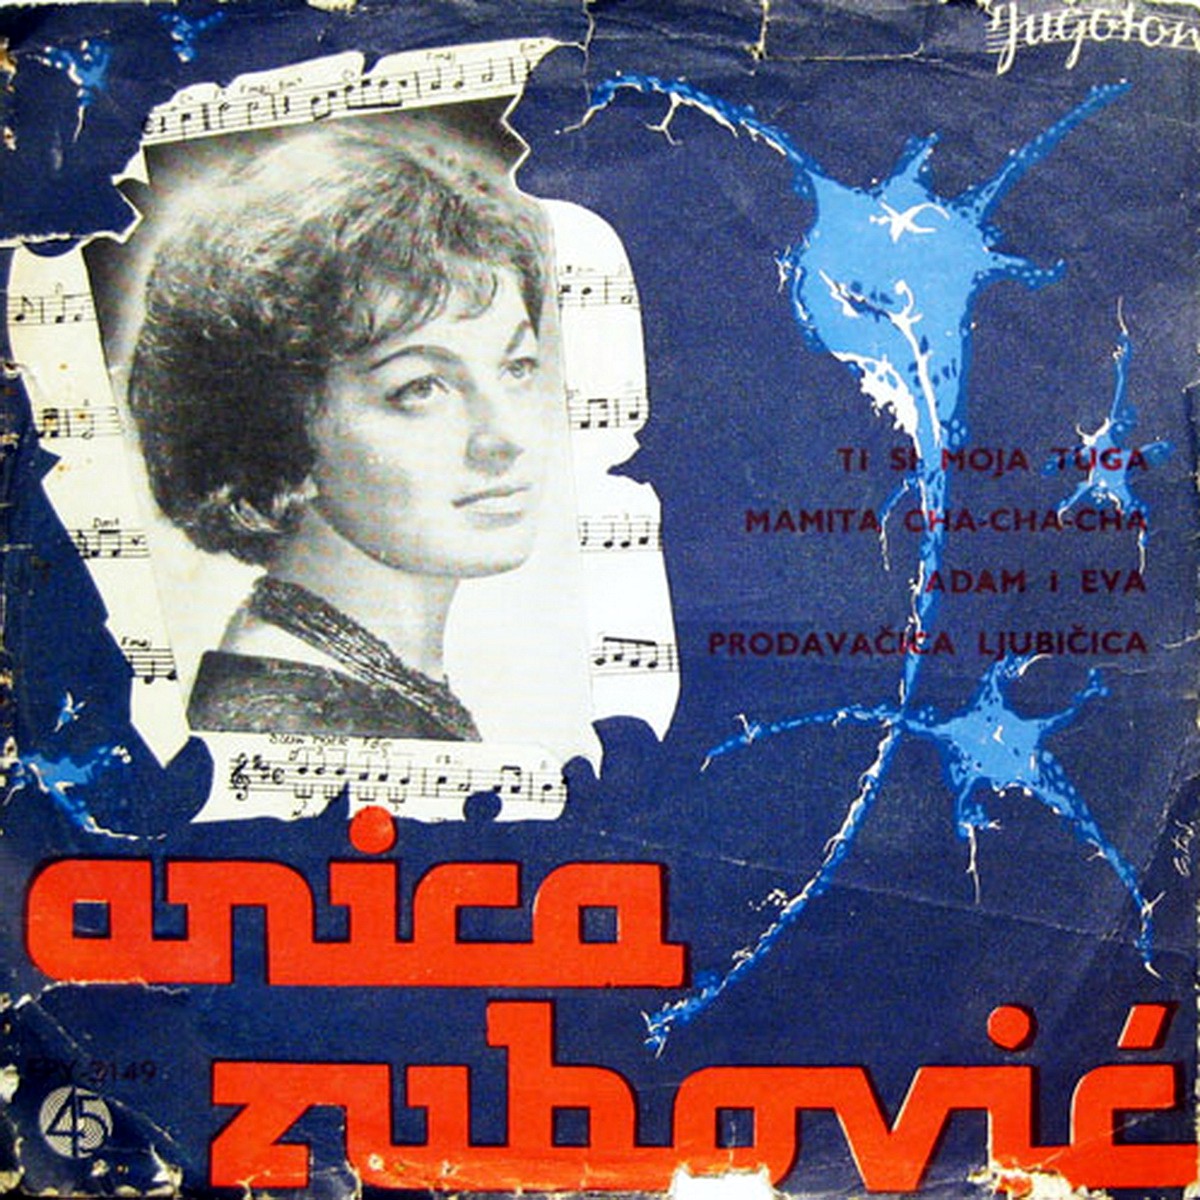 x Anica Zubovic 1961 Prodavacica ljubicica a